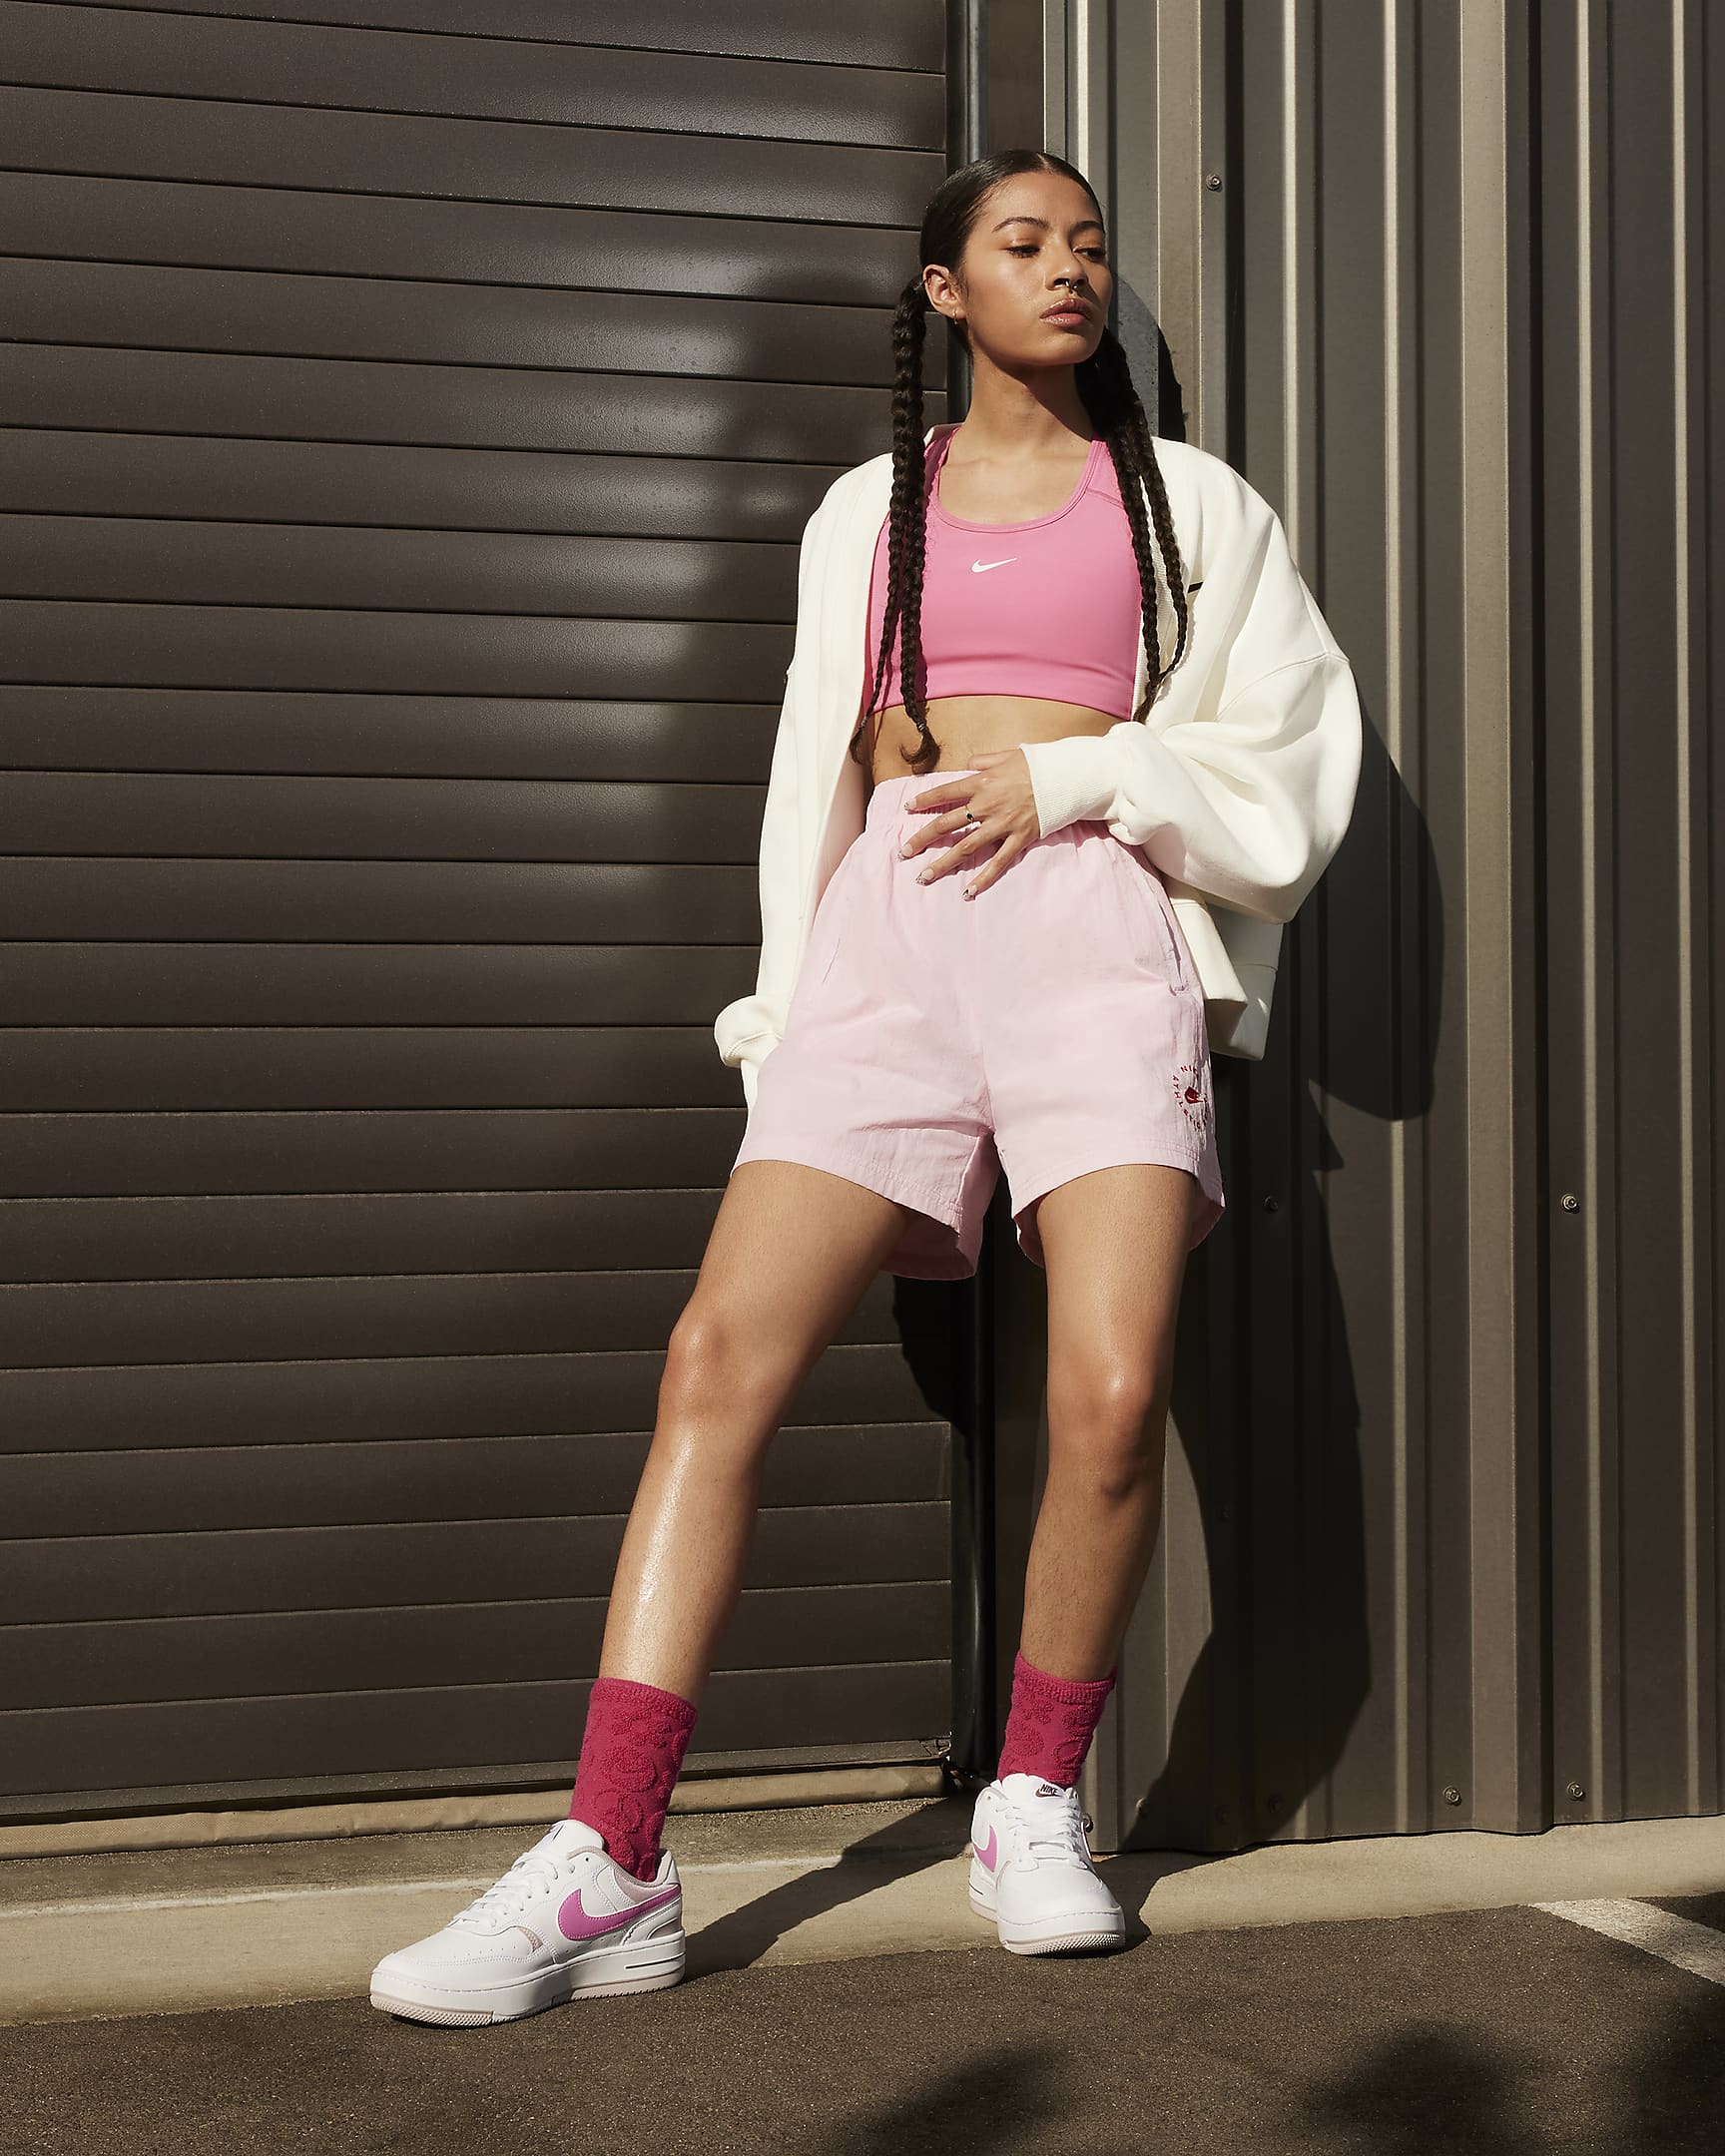 Chaussure Nike Gamma Force pour femme - Blanc/Platinum Violet/Pink Foam/Playful Pink